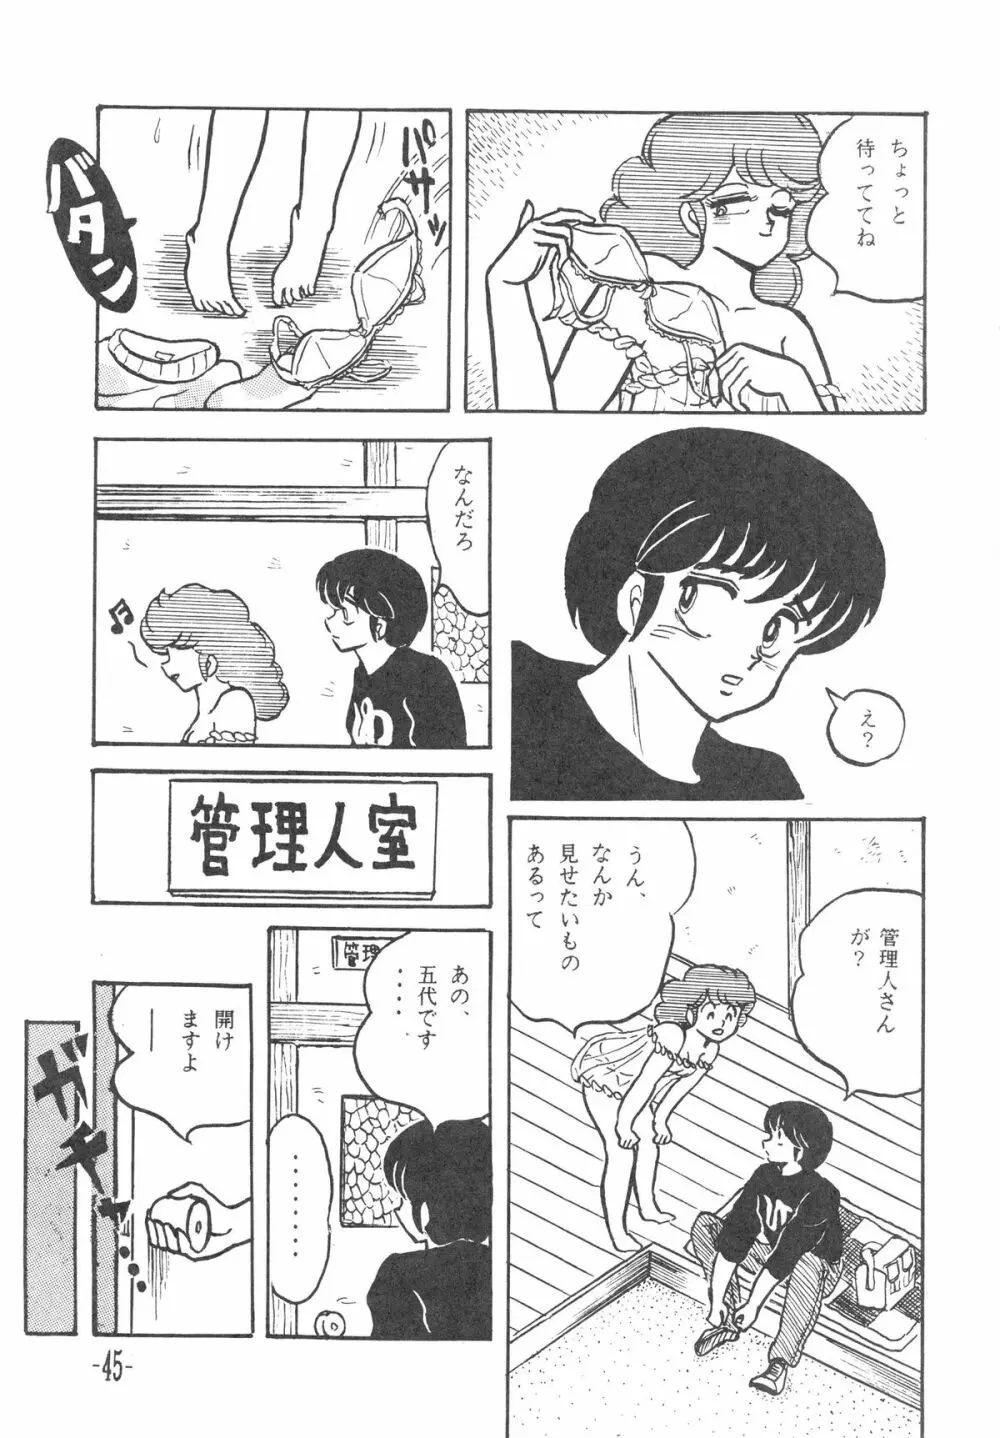 MIBOJIN GESHUKU 1 & 2 45ページ